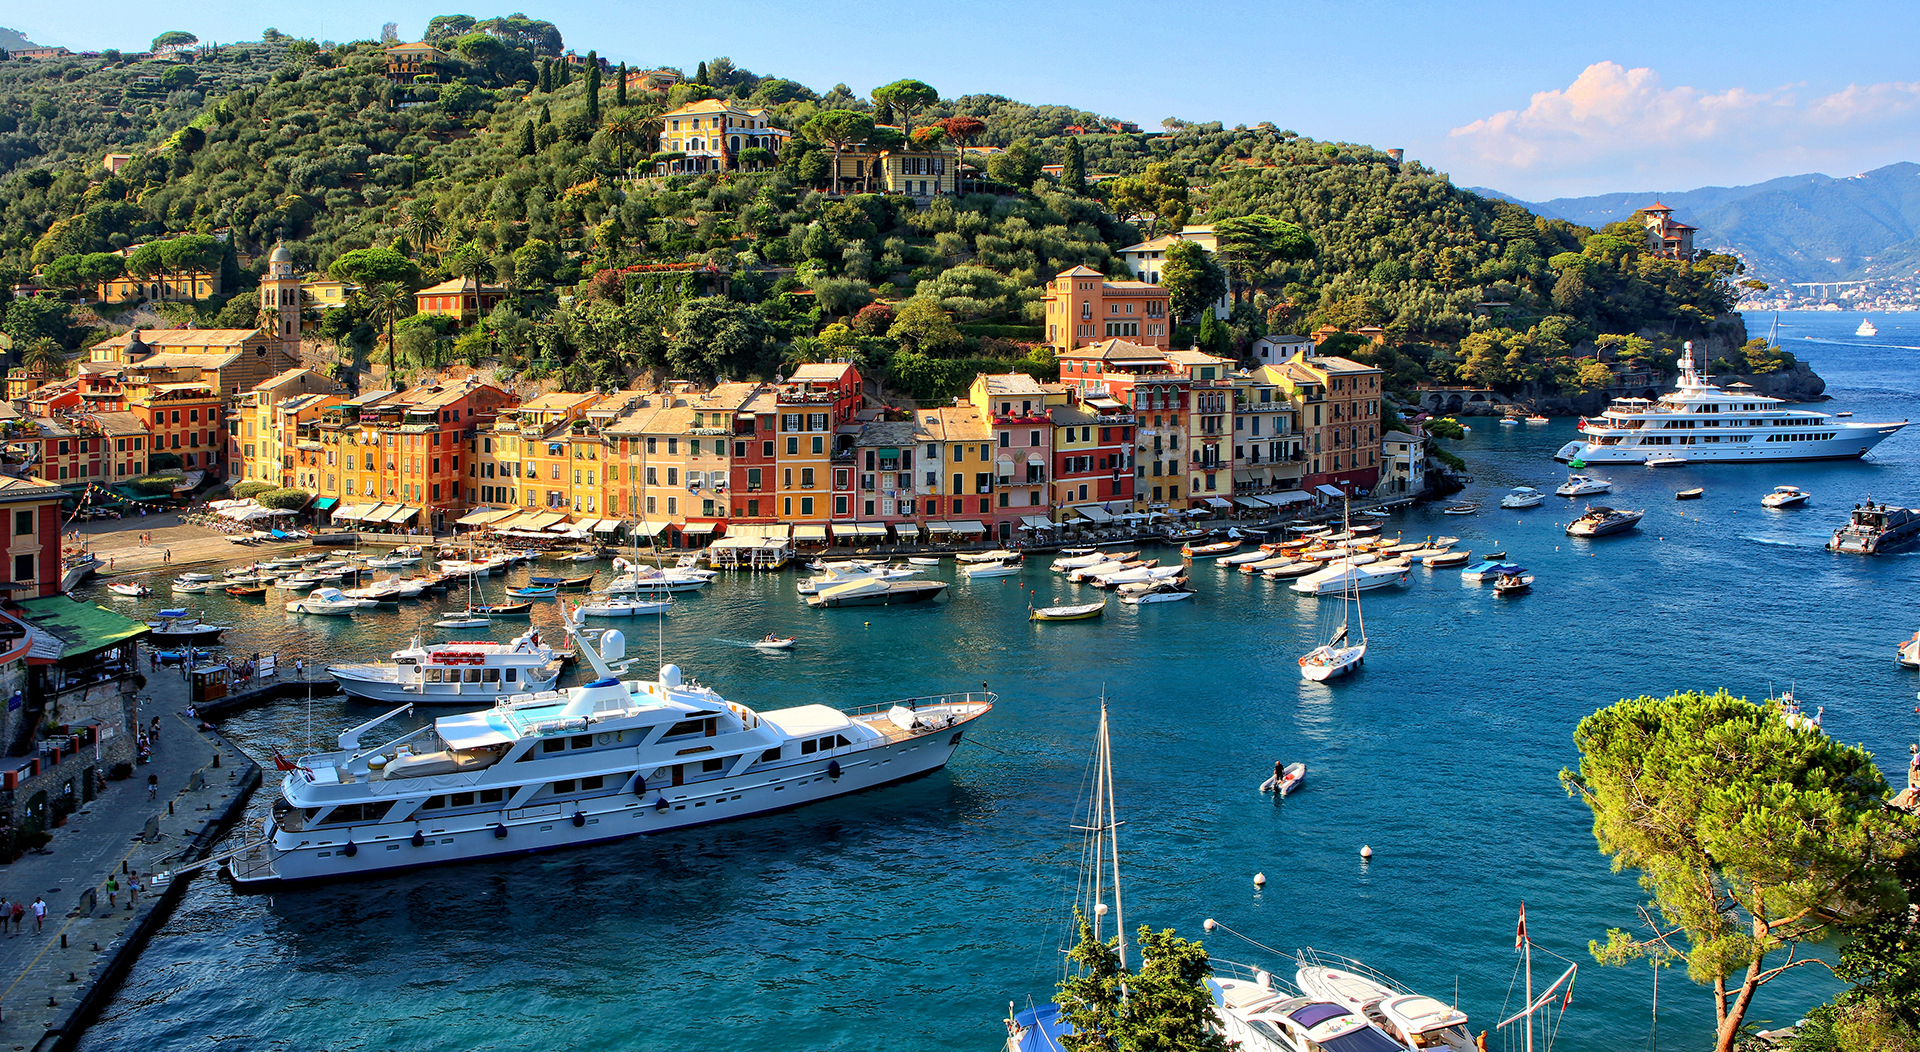 Crociera a vela: Portofino e la Riviera Ligure